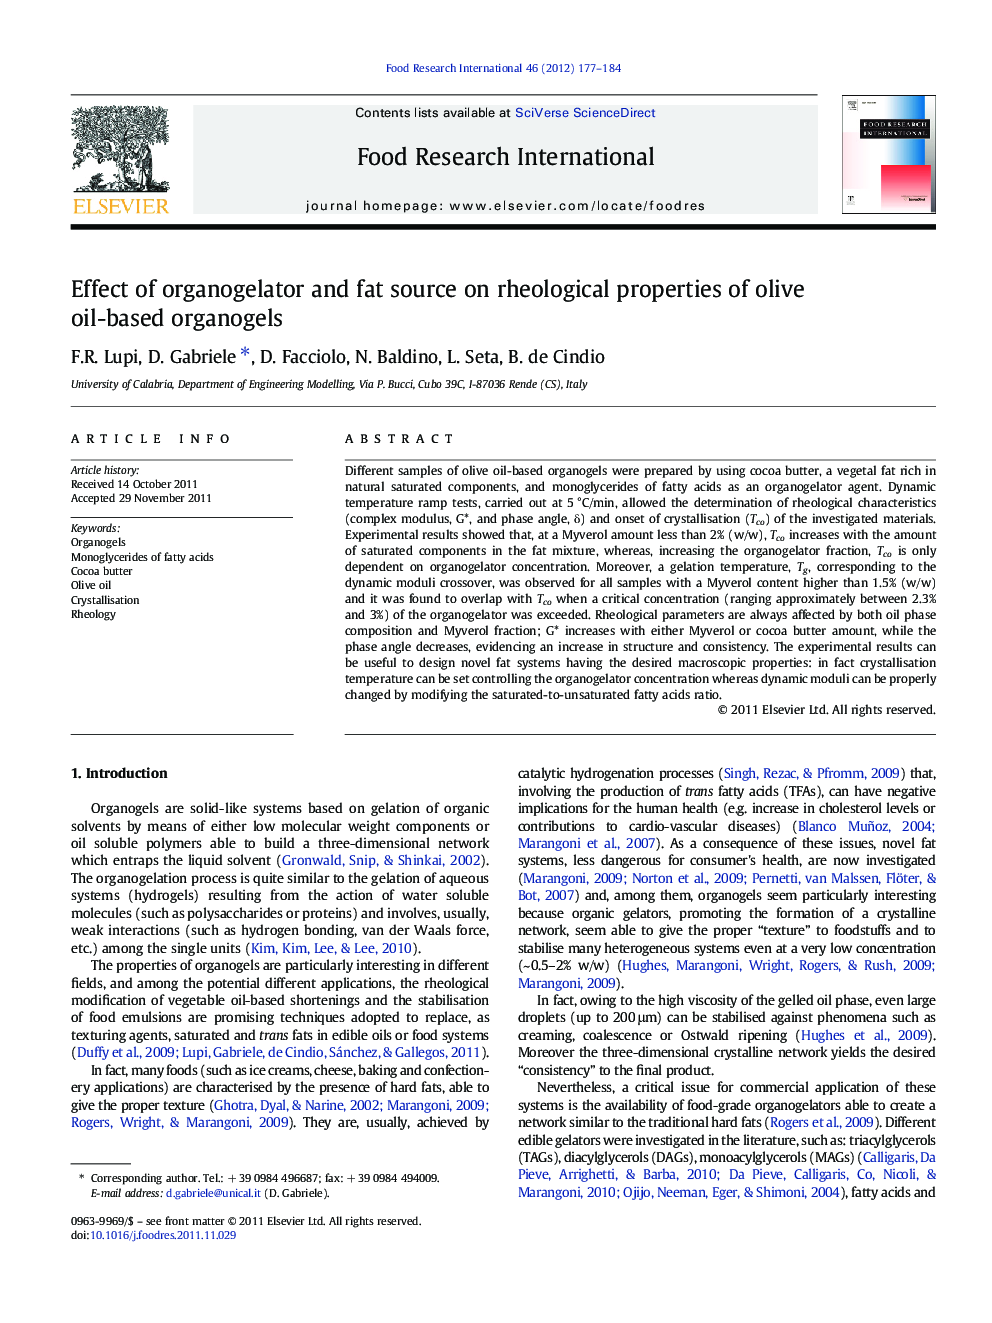 Effect of organogelator and fat source on rheological properties of olive oil-based organogels